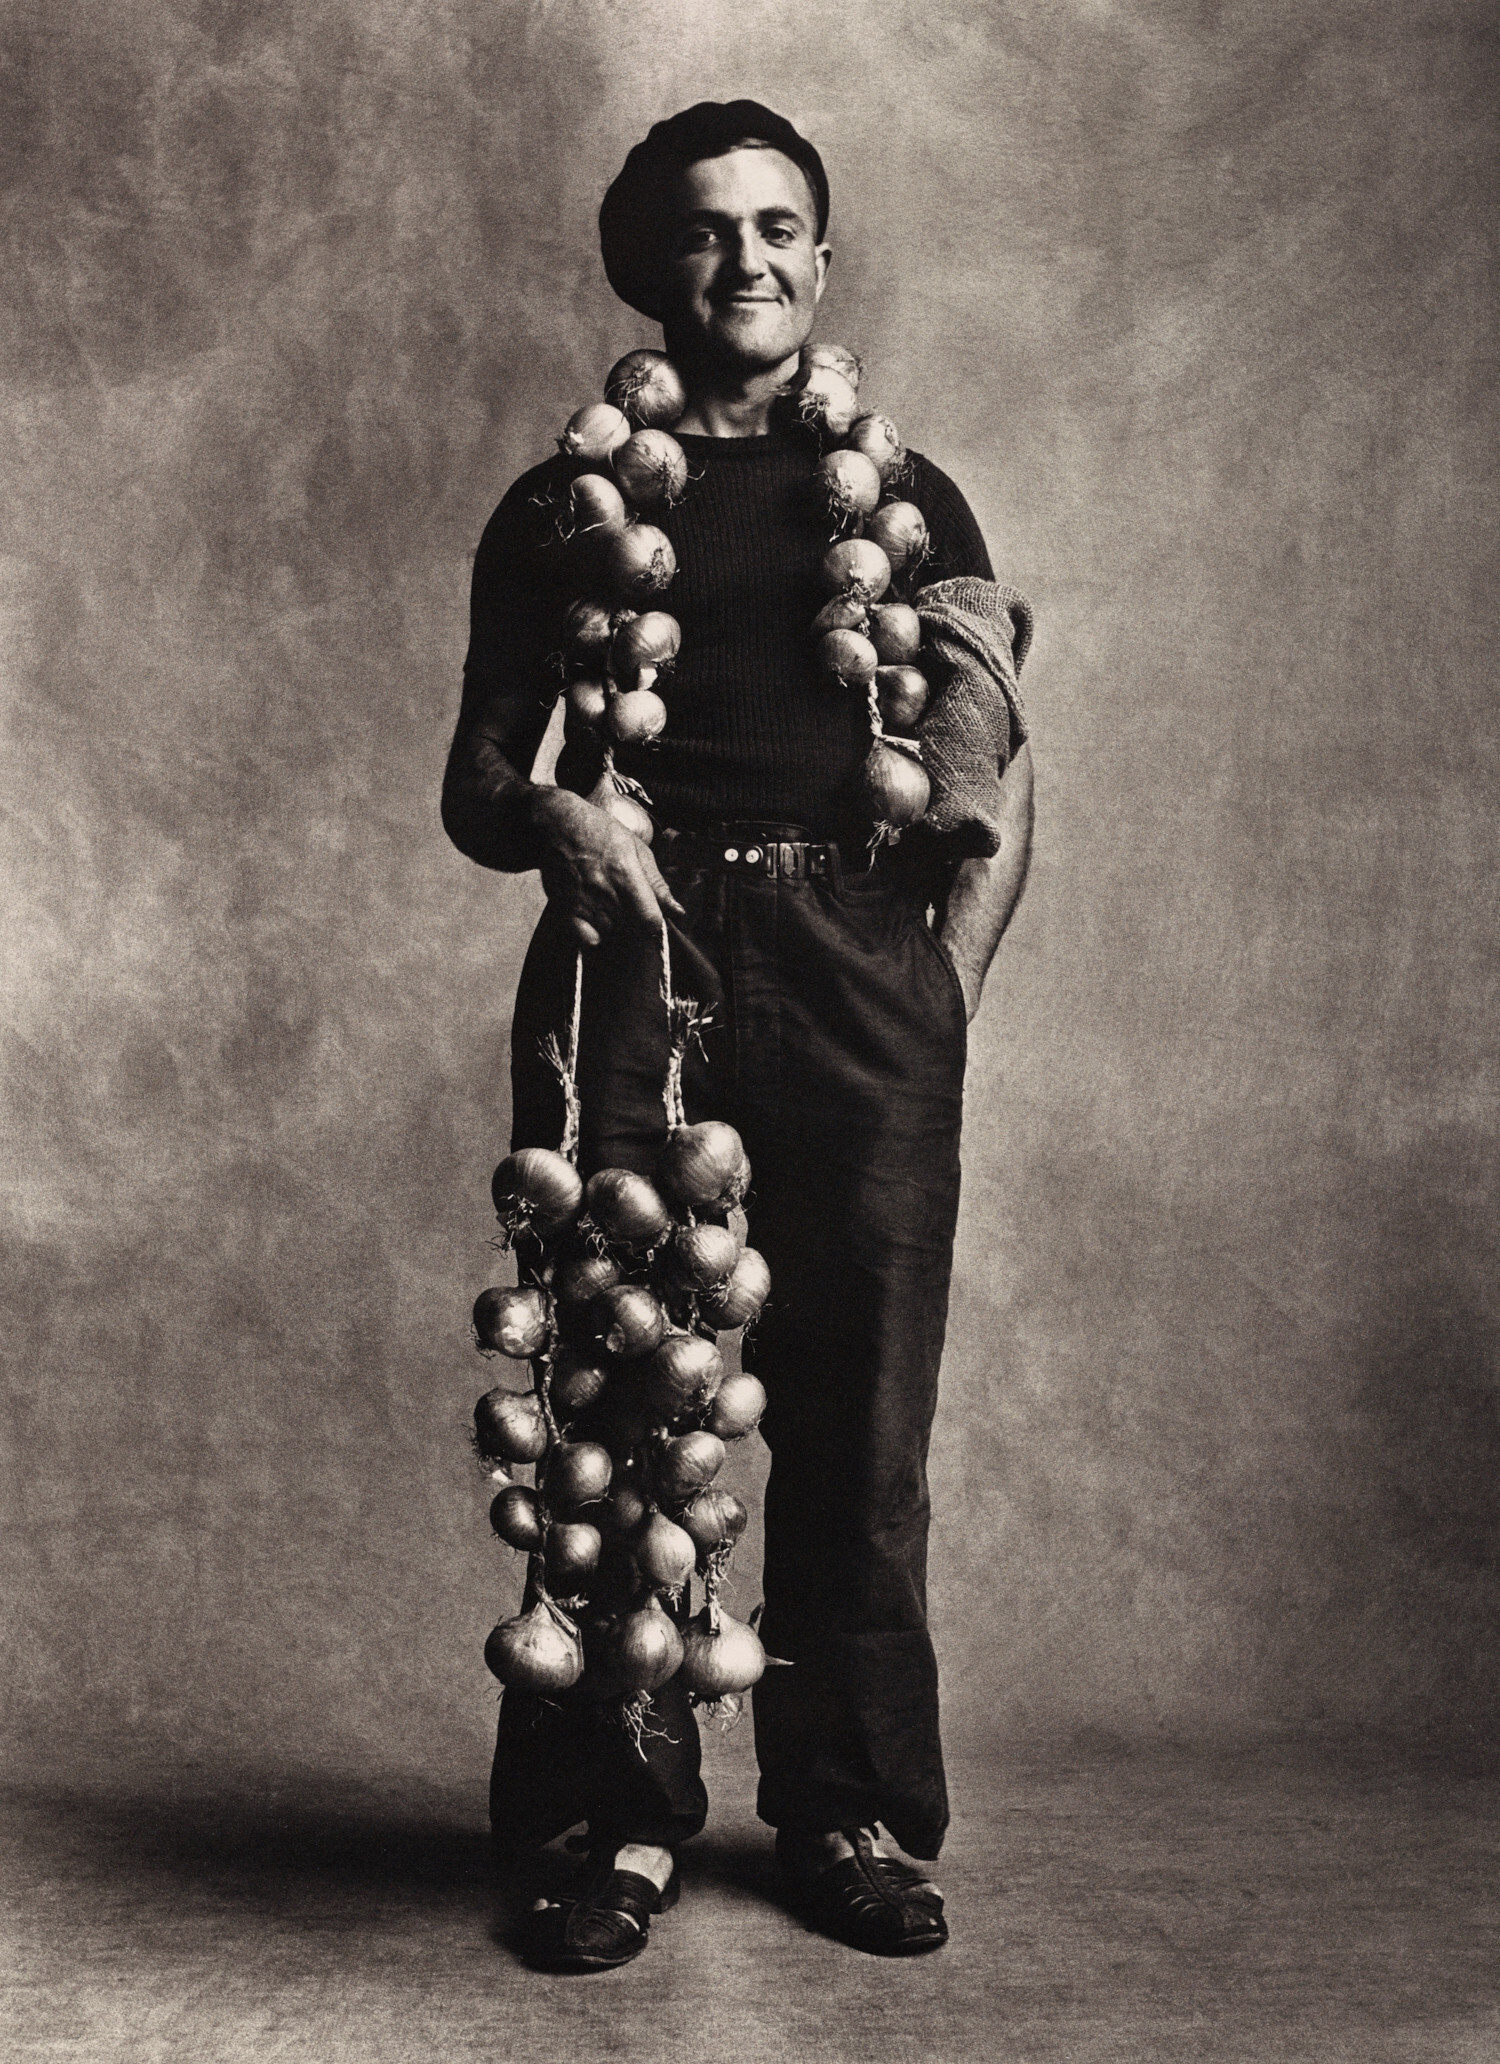 Бретонский продавец лука, Лондон, 1950 г. Фотограф Ирвин Пенн